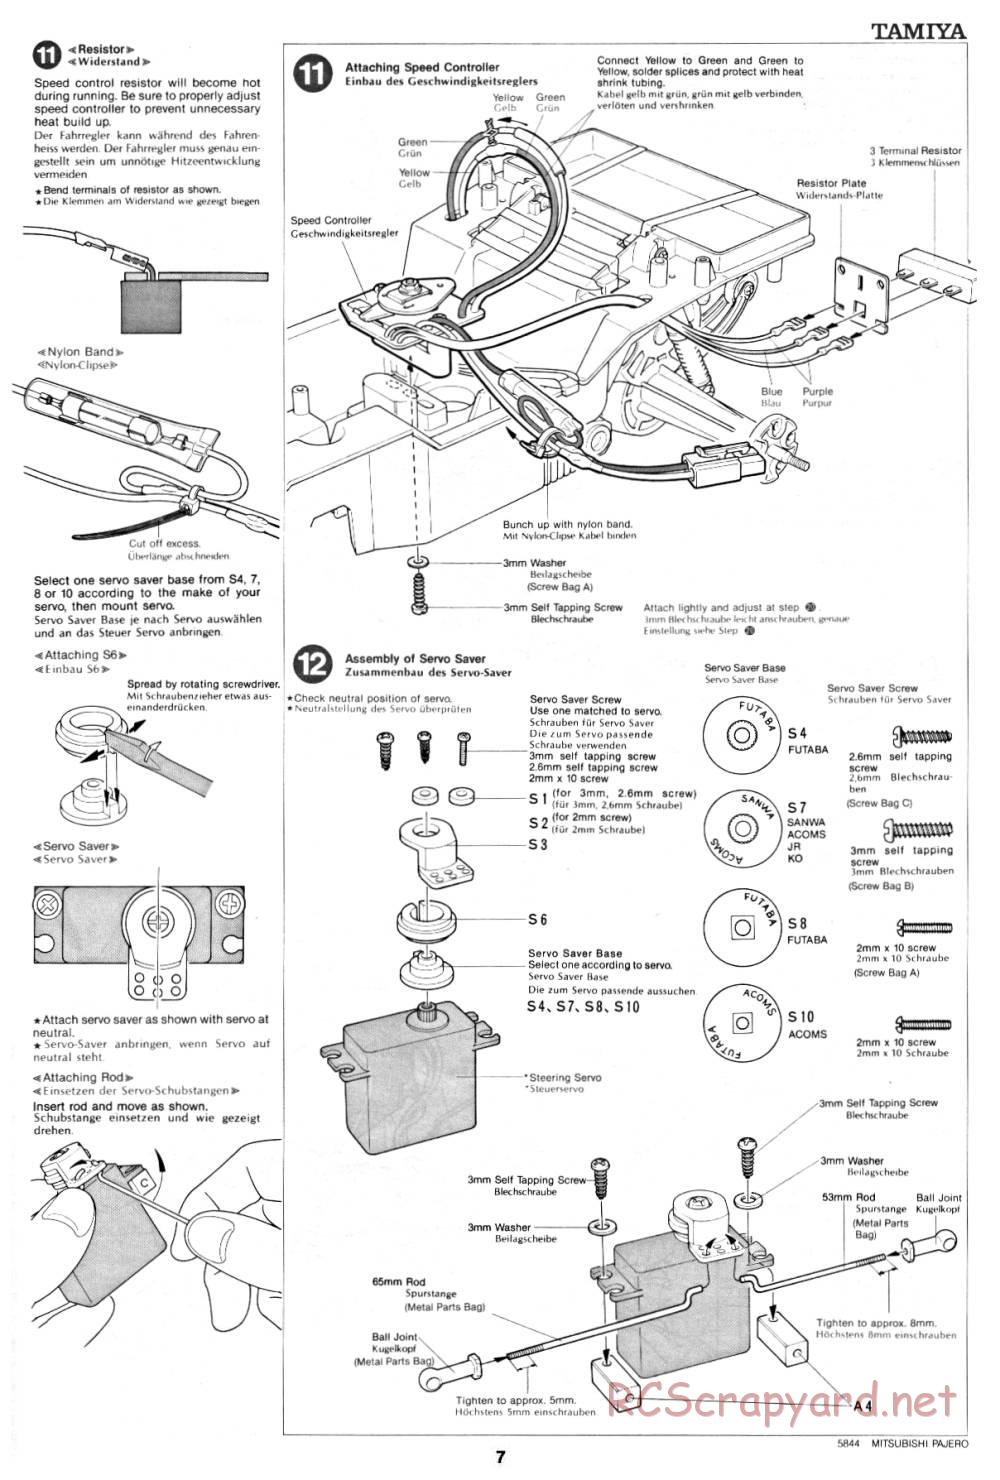 Tamiya - Mitsubishi Pajero - 58044 - Manual - Page 7